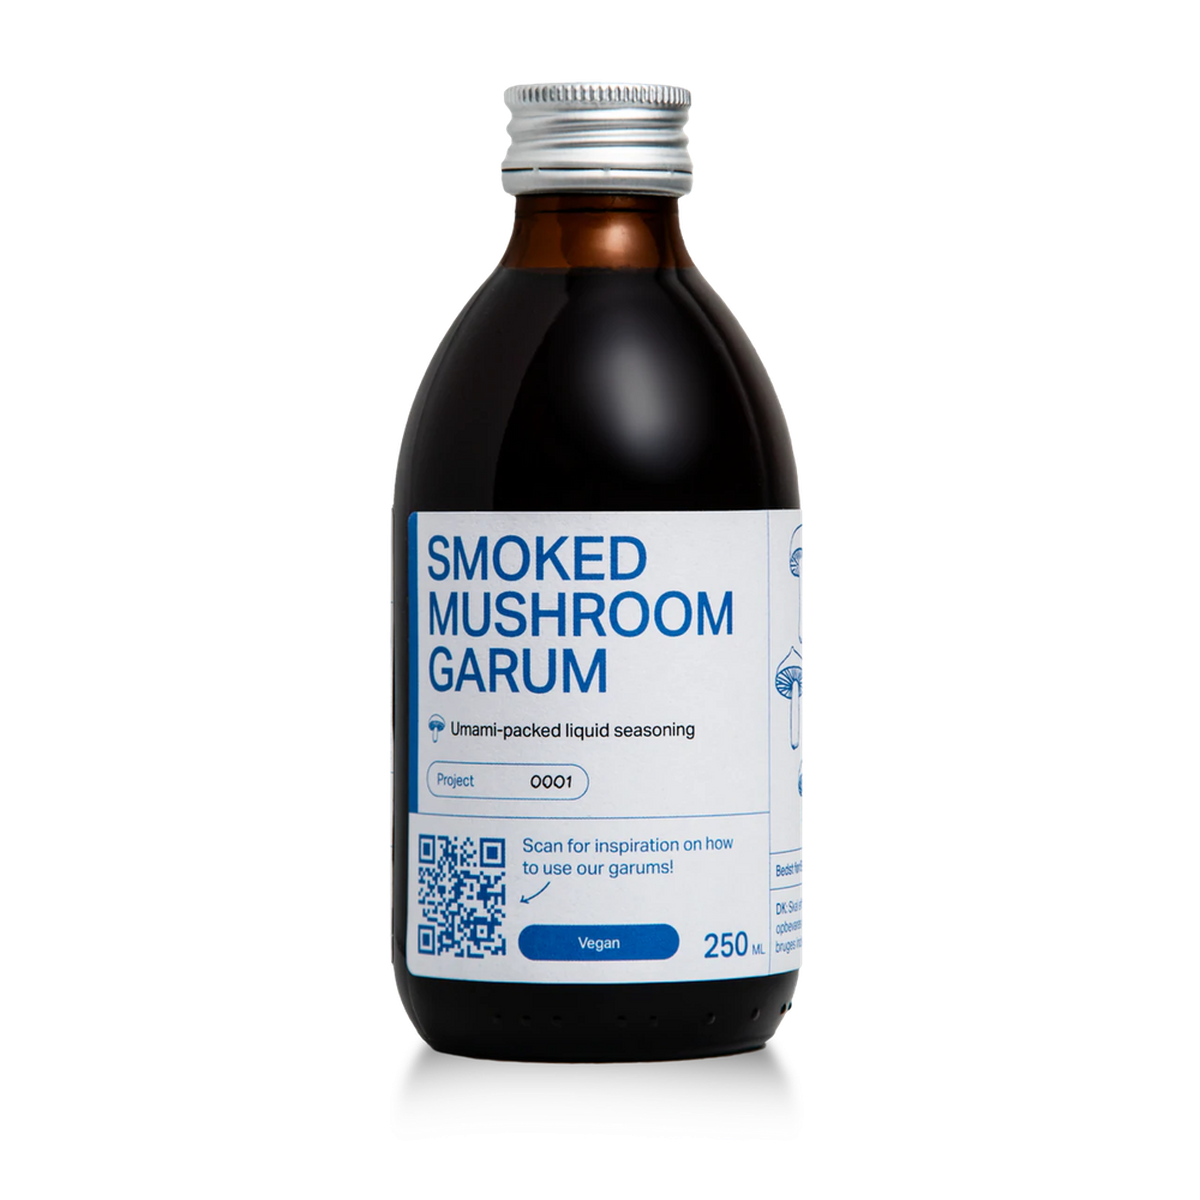 A bottle of smoked mushroom garum